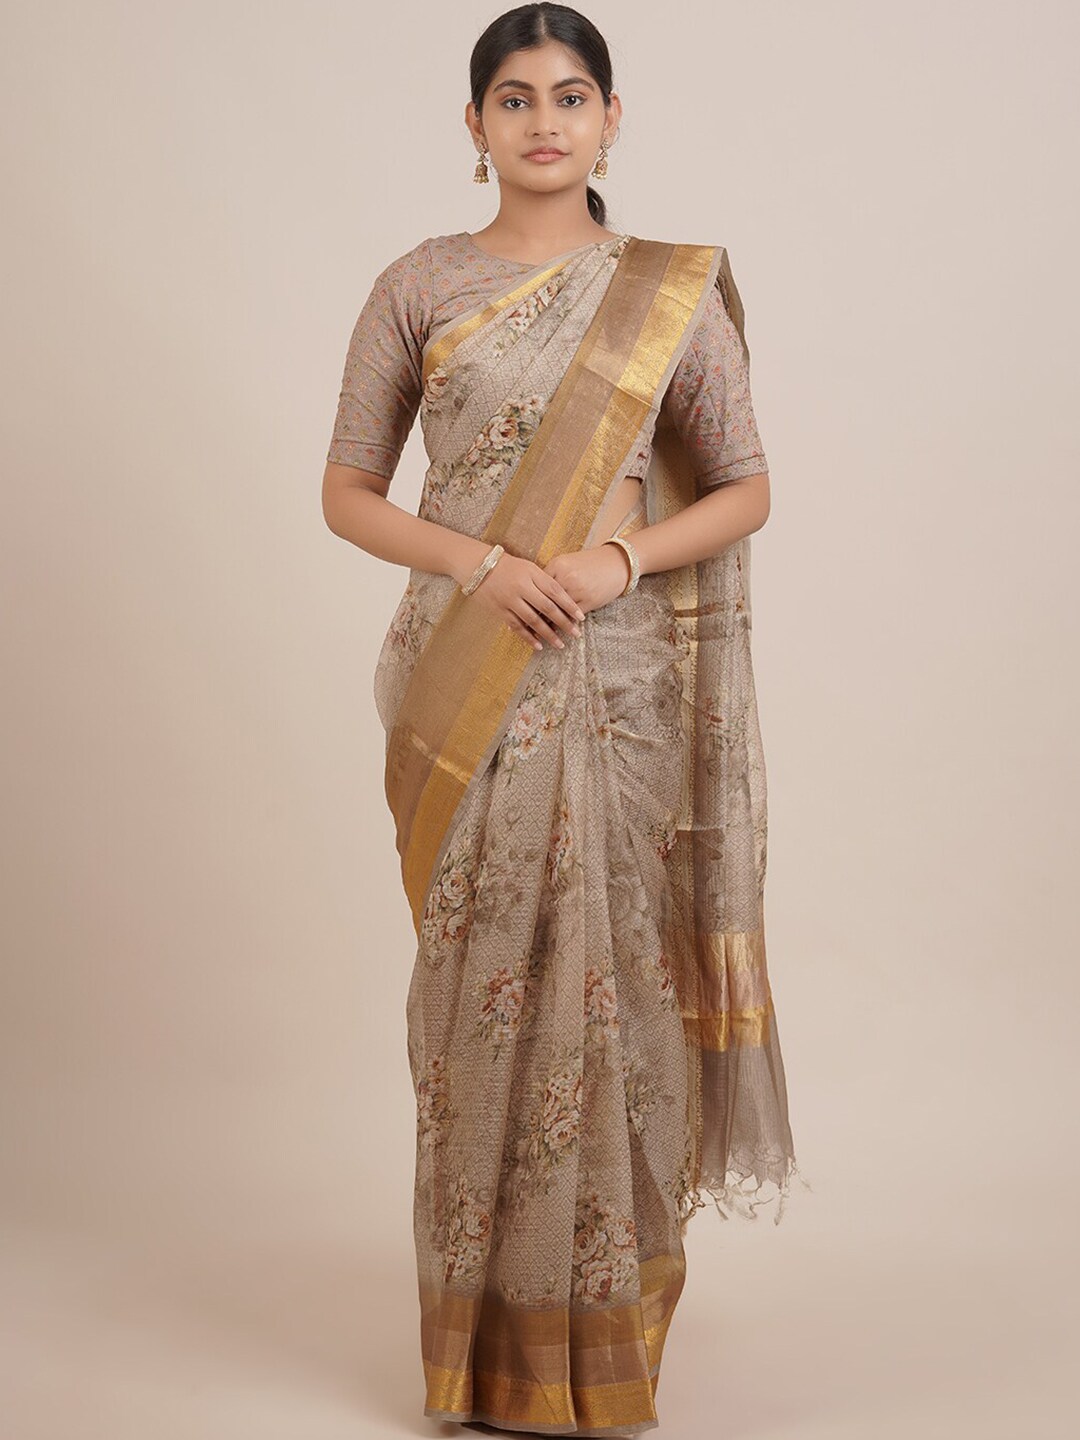 Pothys Grey & Gold-Toned Floral Zari Pure Silk Saree Price in India